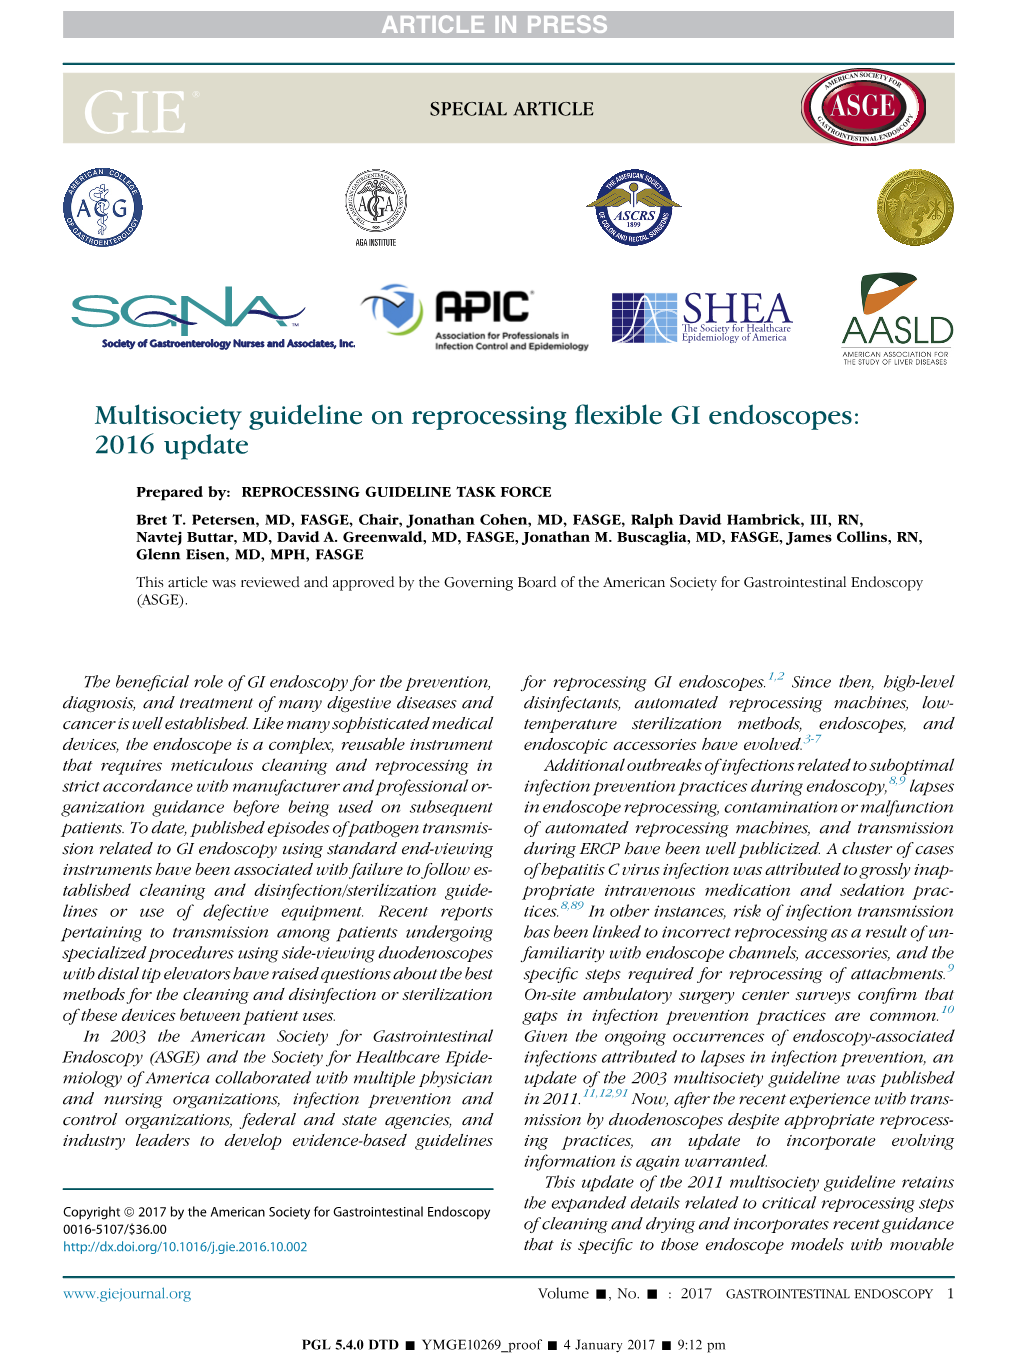 Multisociety Guideline on Reprocessing Flexible GI Endoscopes